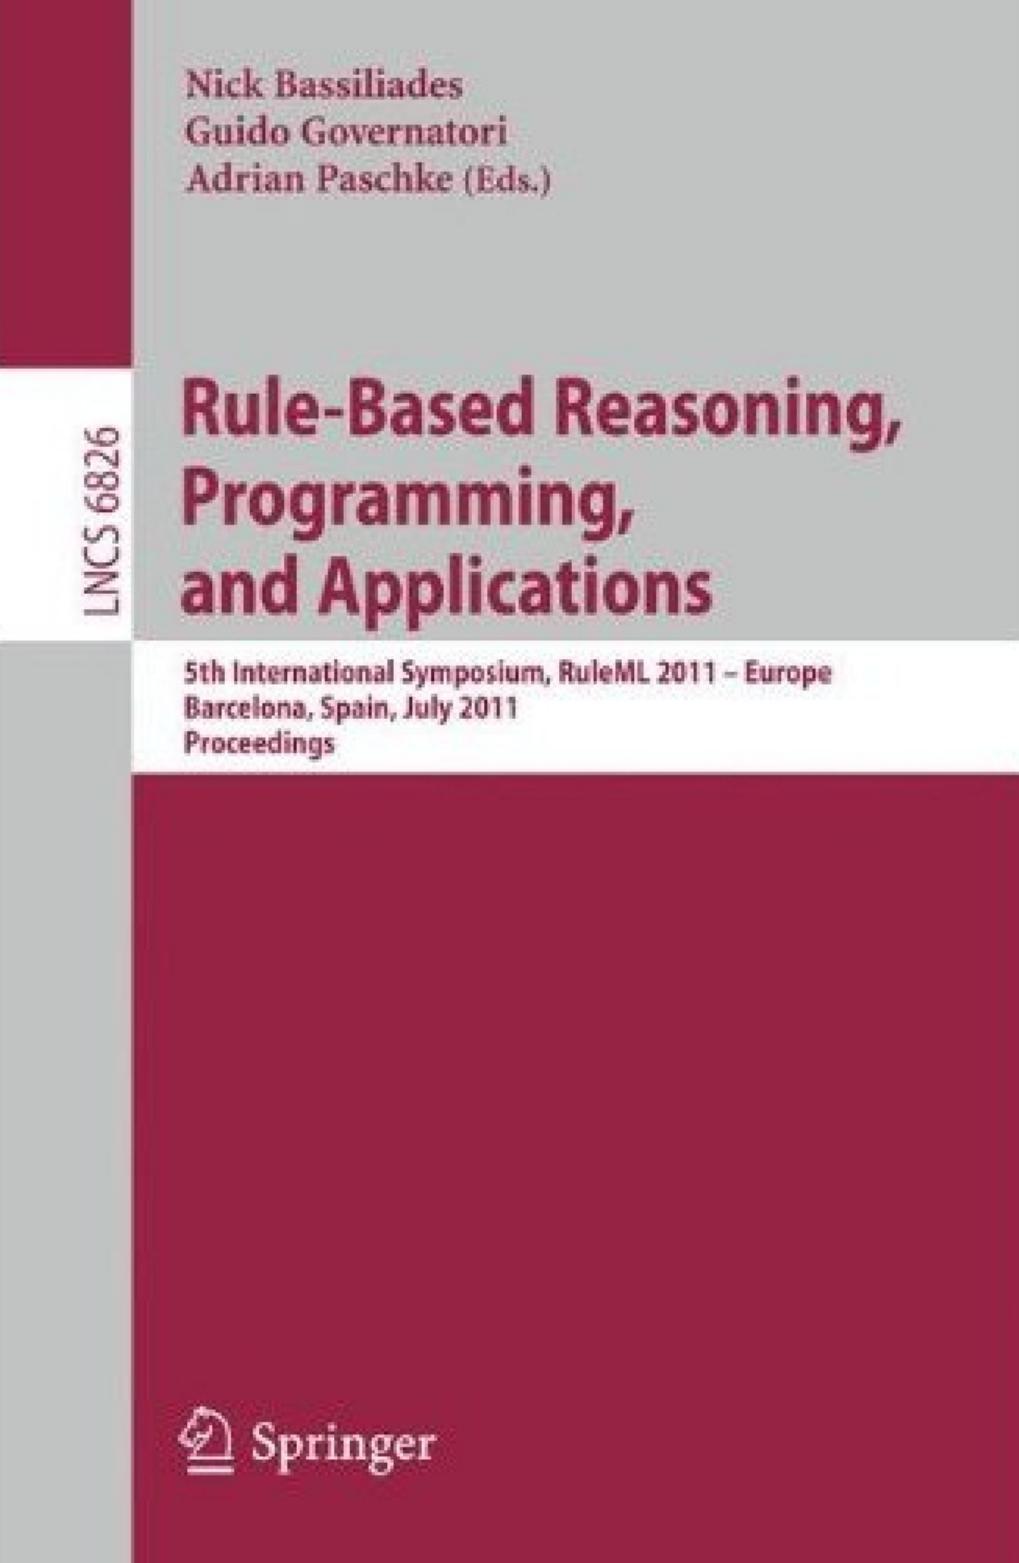 Rule-Based Reasoning, Programming, and Applications: 5th International Symposium, RuleML 2011 - Europe, Barcelona, Spain, July 19-21, 2011, Proceedings